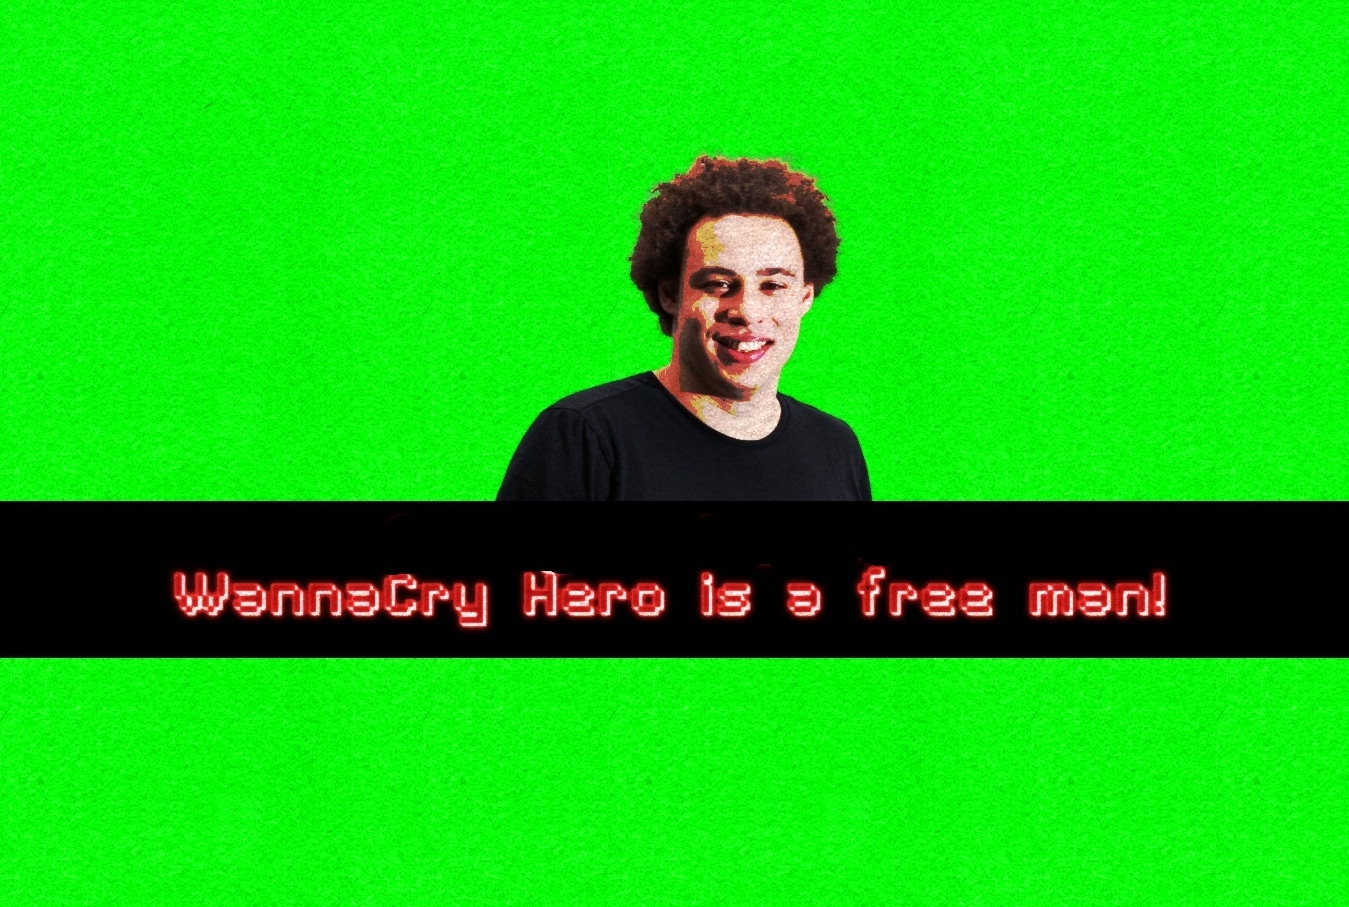 WannaCry hero Marcus Hutchin aka MalwareTech won't serve prison time